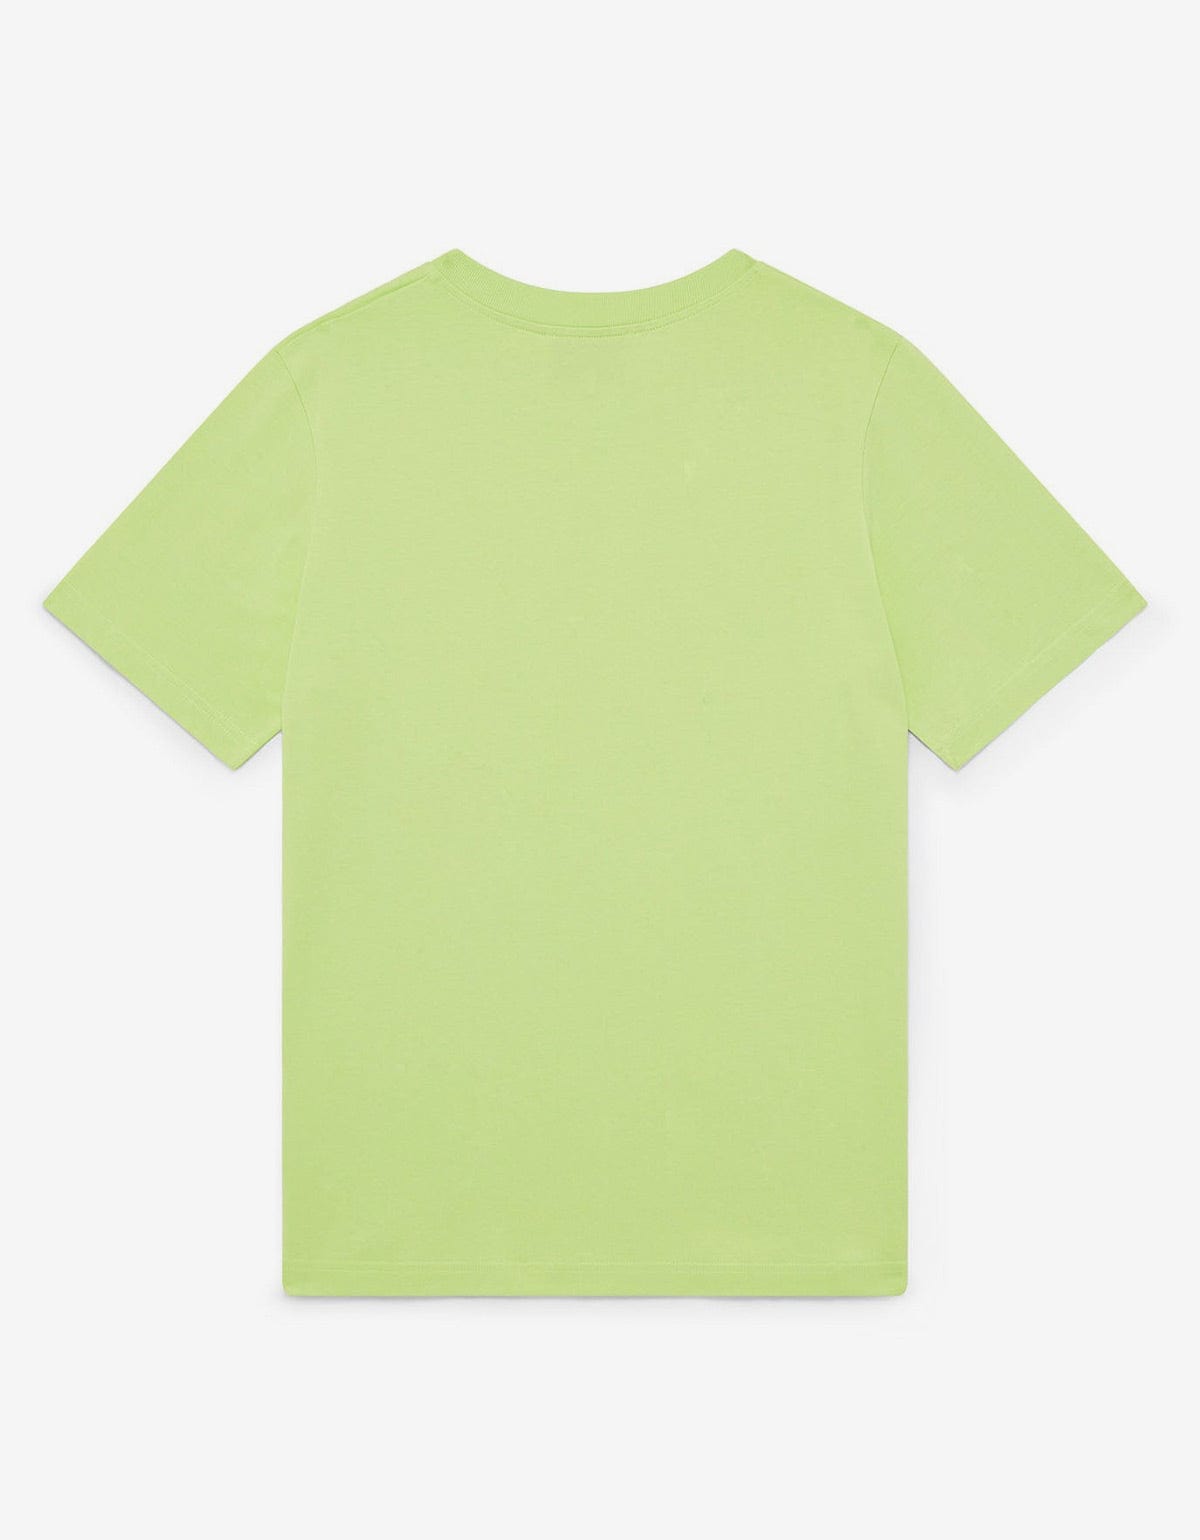 Casablanca Green Afro Cubism Tennis Club T-Shirt